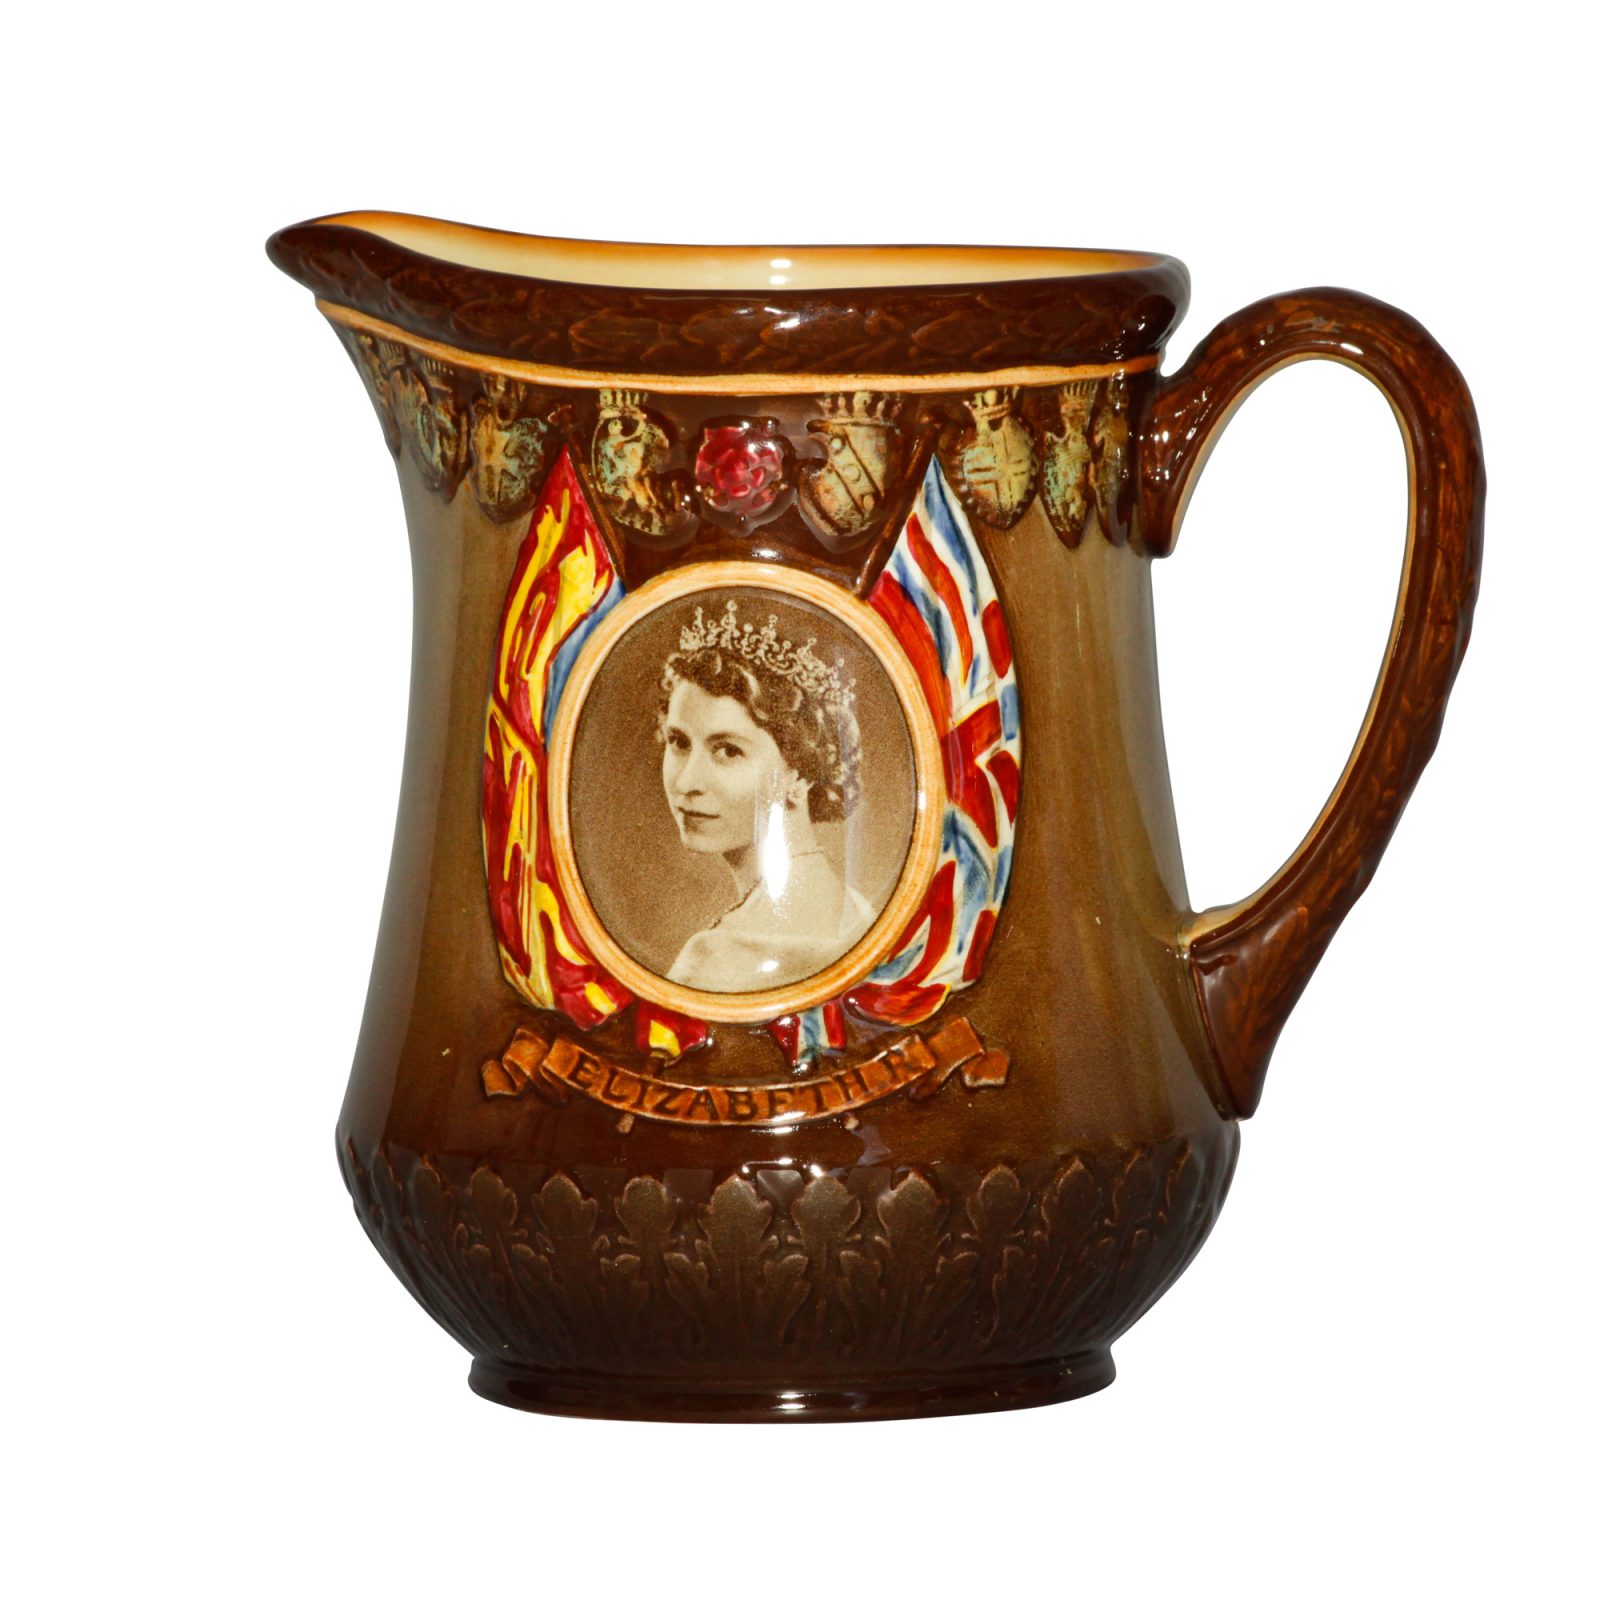 Queen Elizabeth II Pitcher - Royal Doulton Commemorative